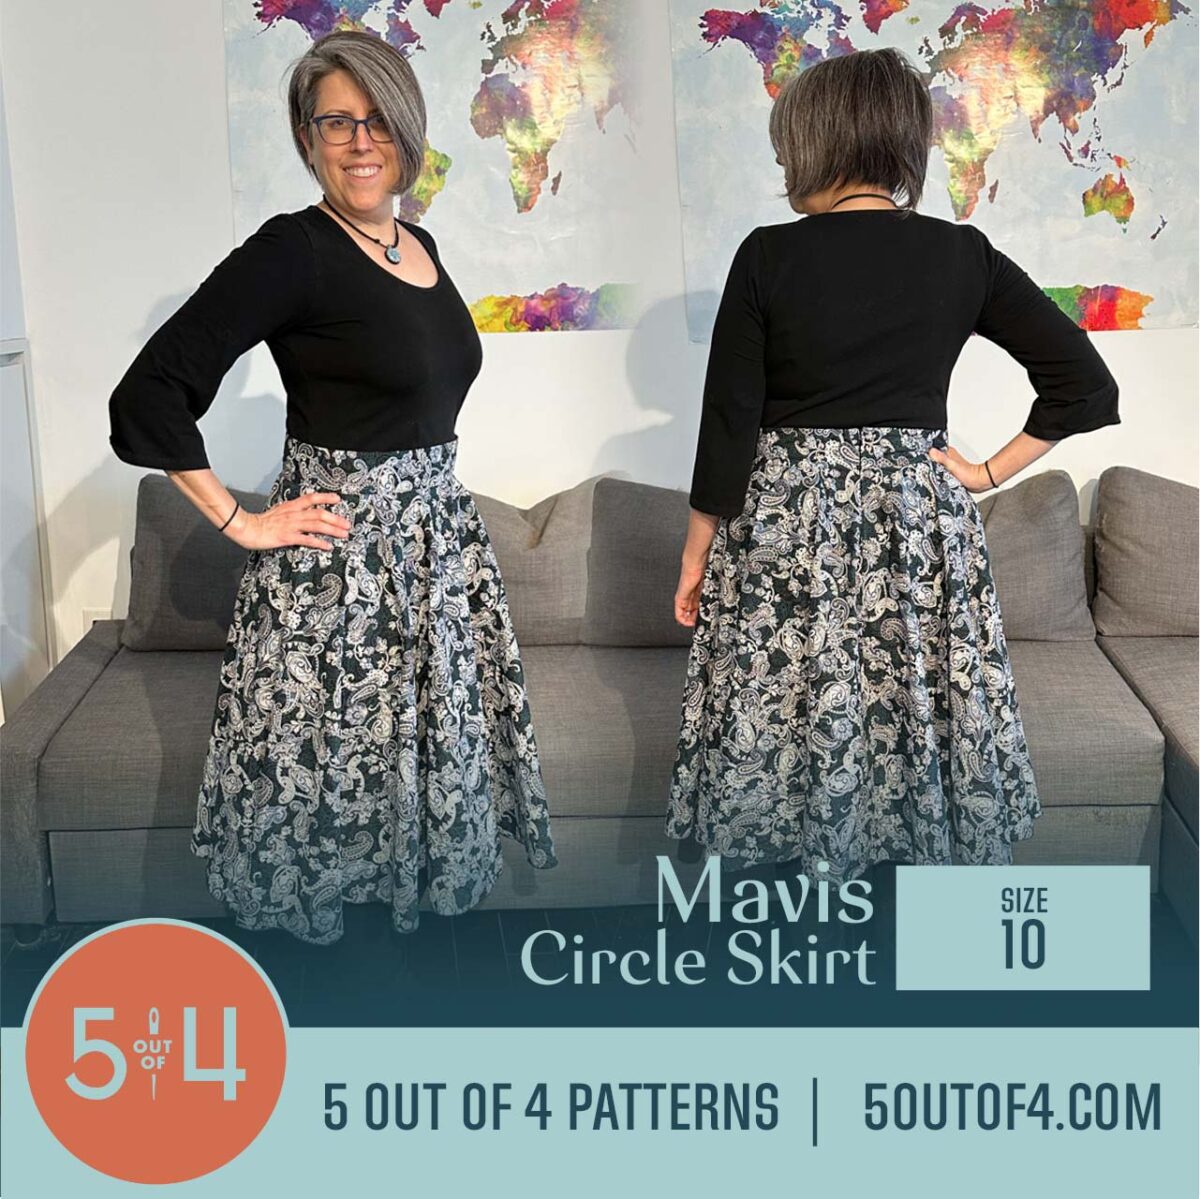 Mavis Circle Skirt - 5 out of 4 Patterns